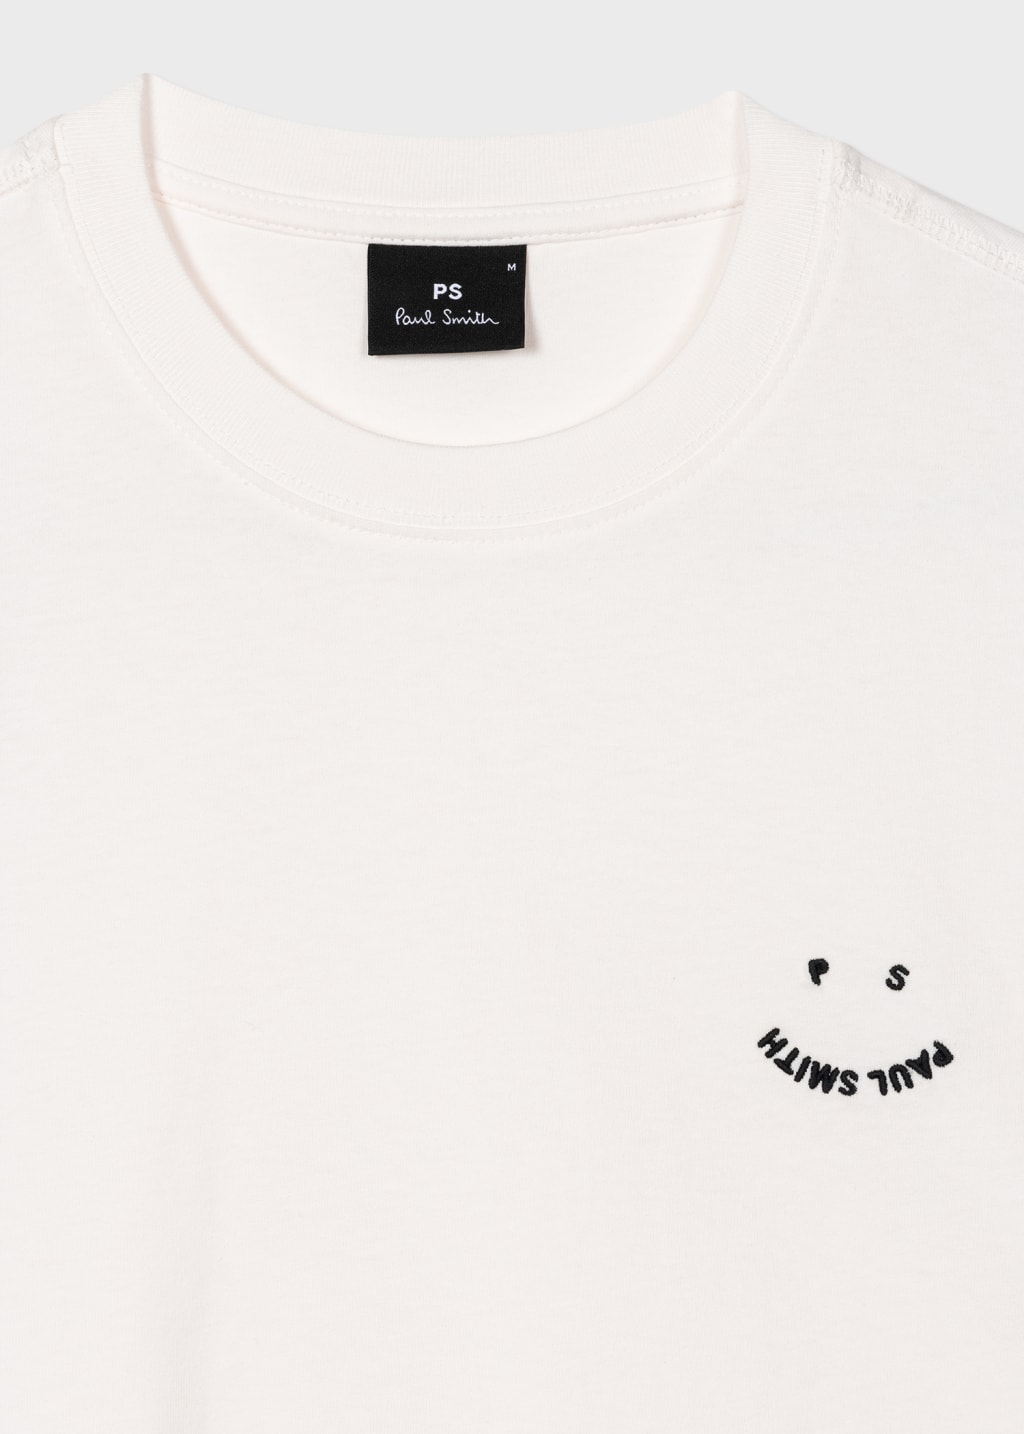 Detail View - White Cotton 'Happy' T-Shirt